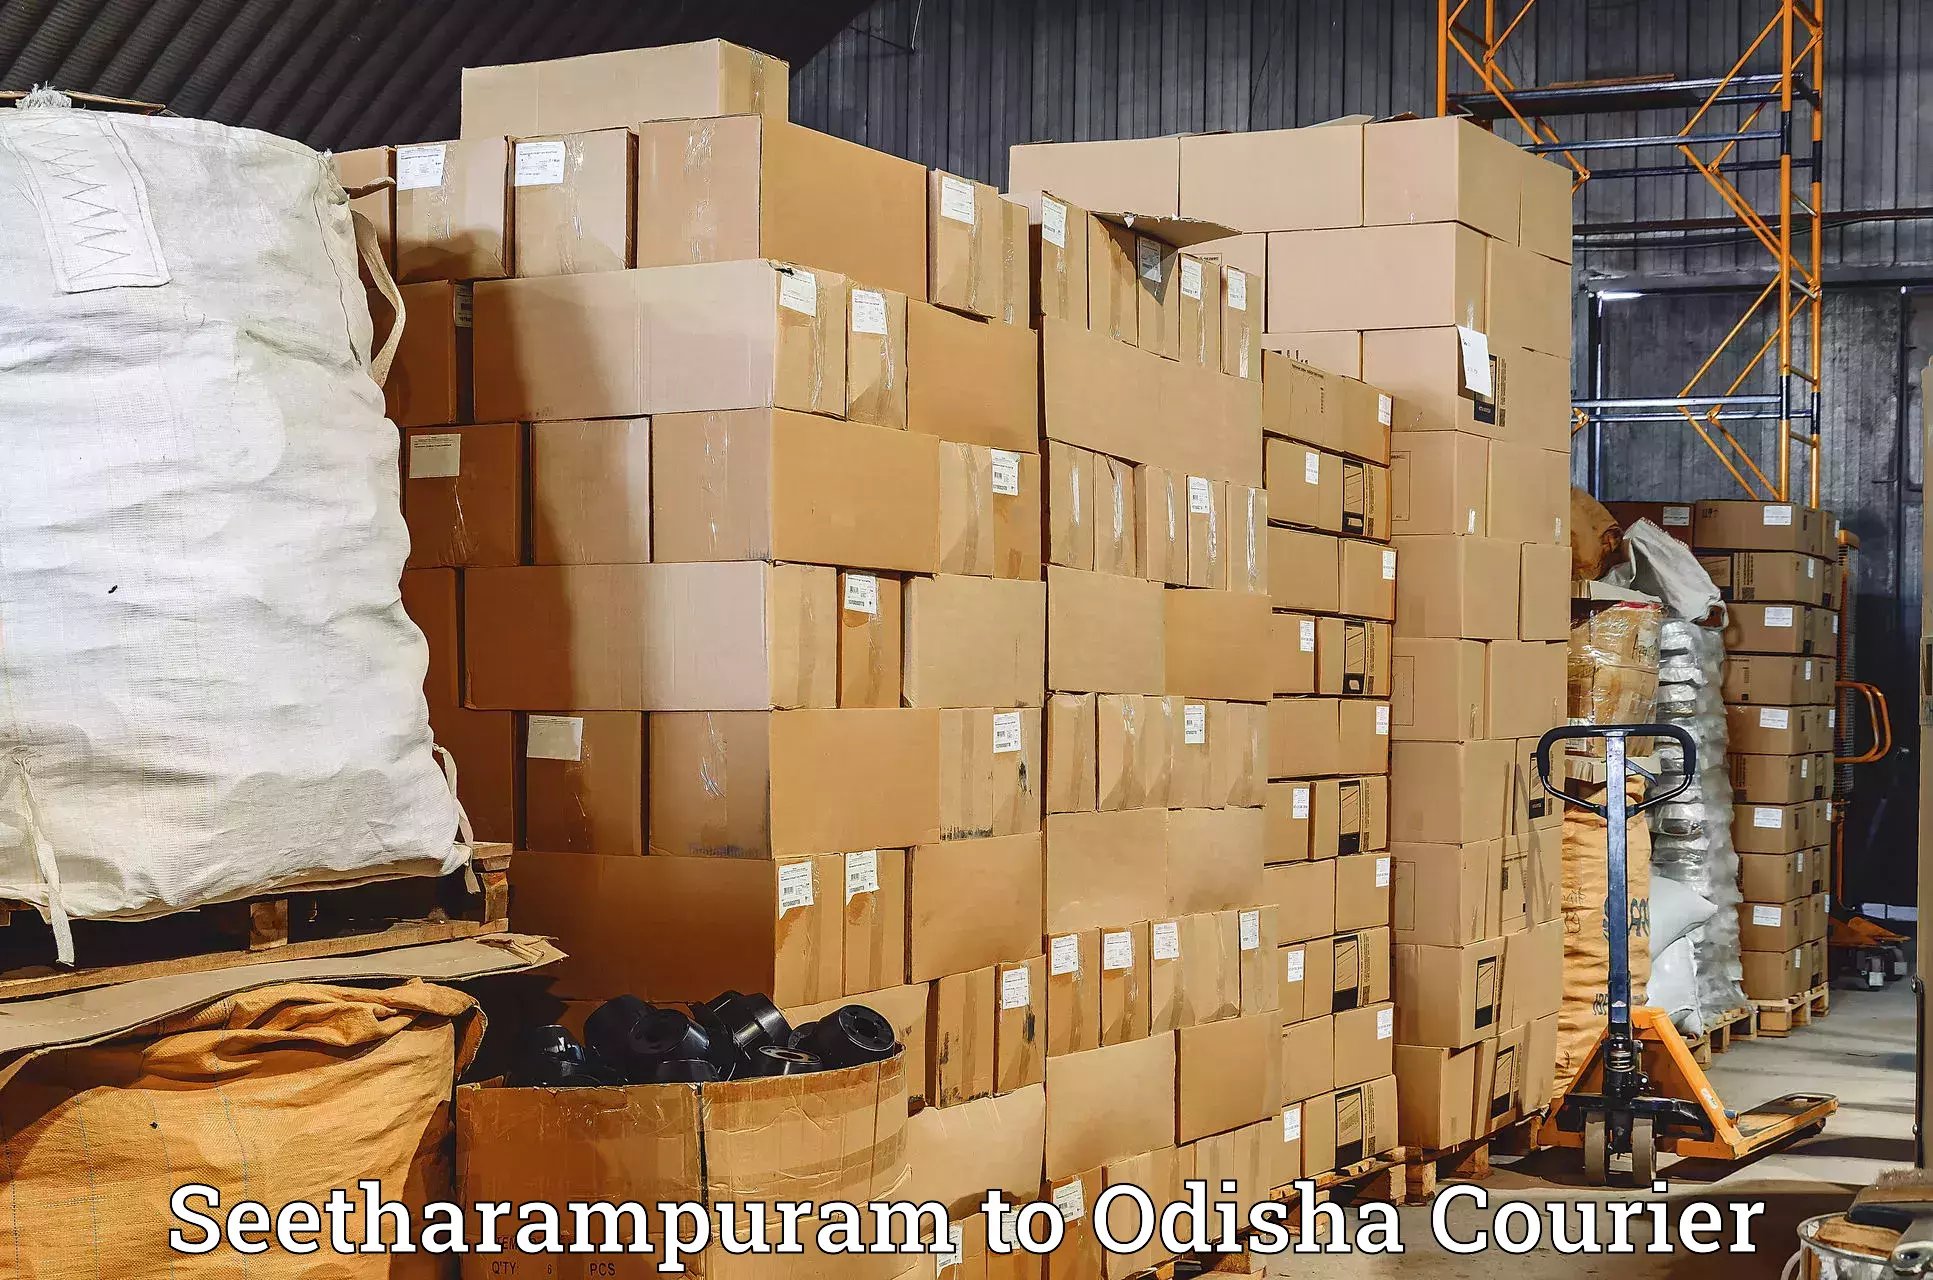 Express delivery network Seetharampuram to Konark